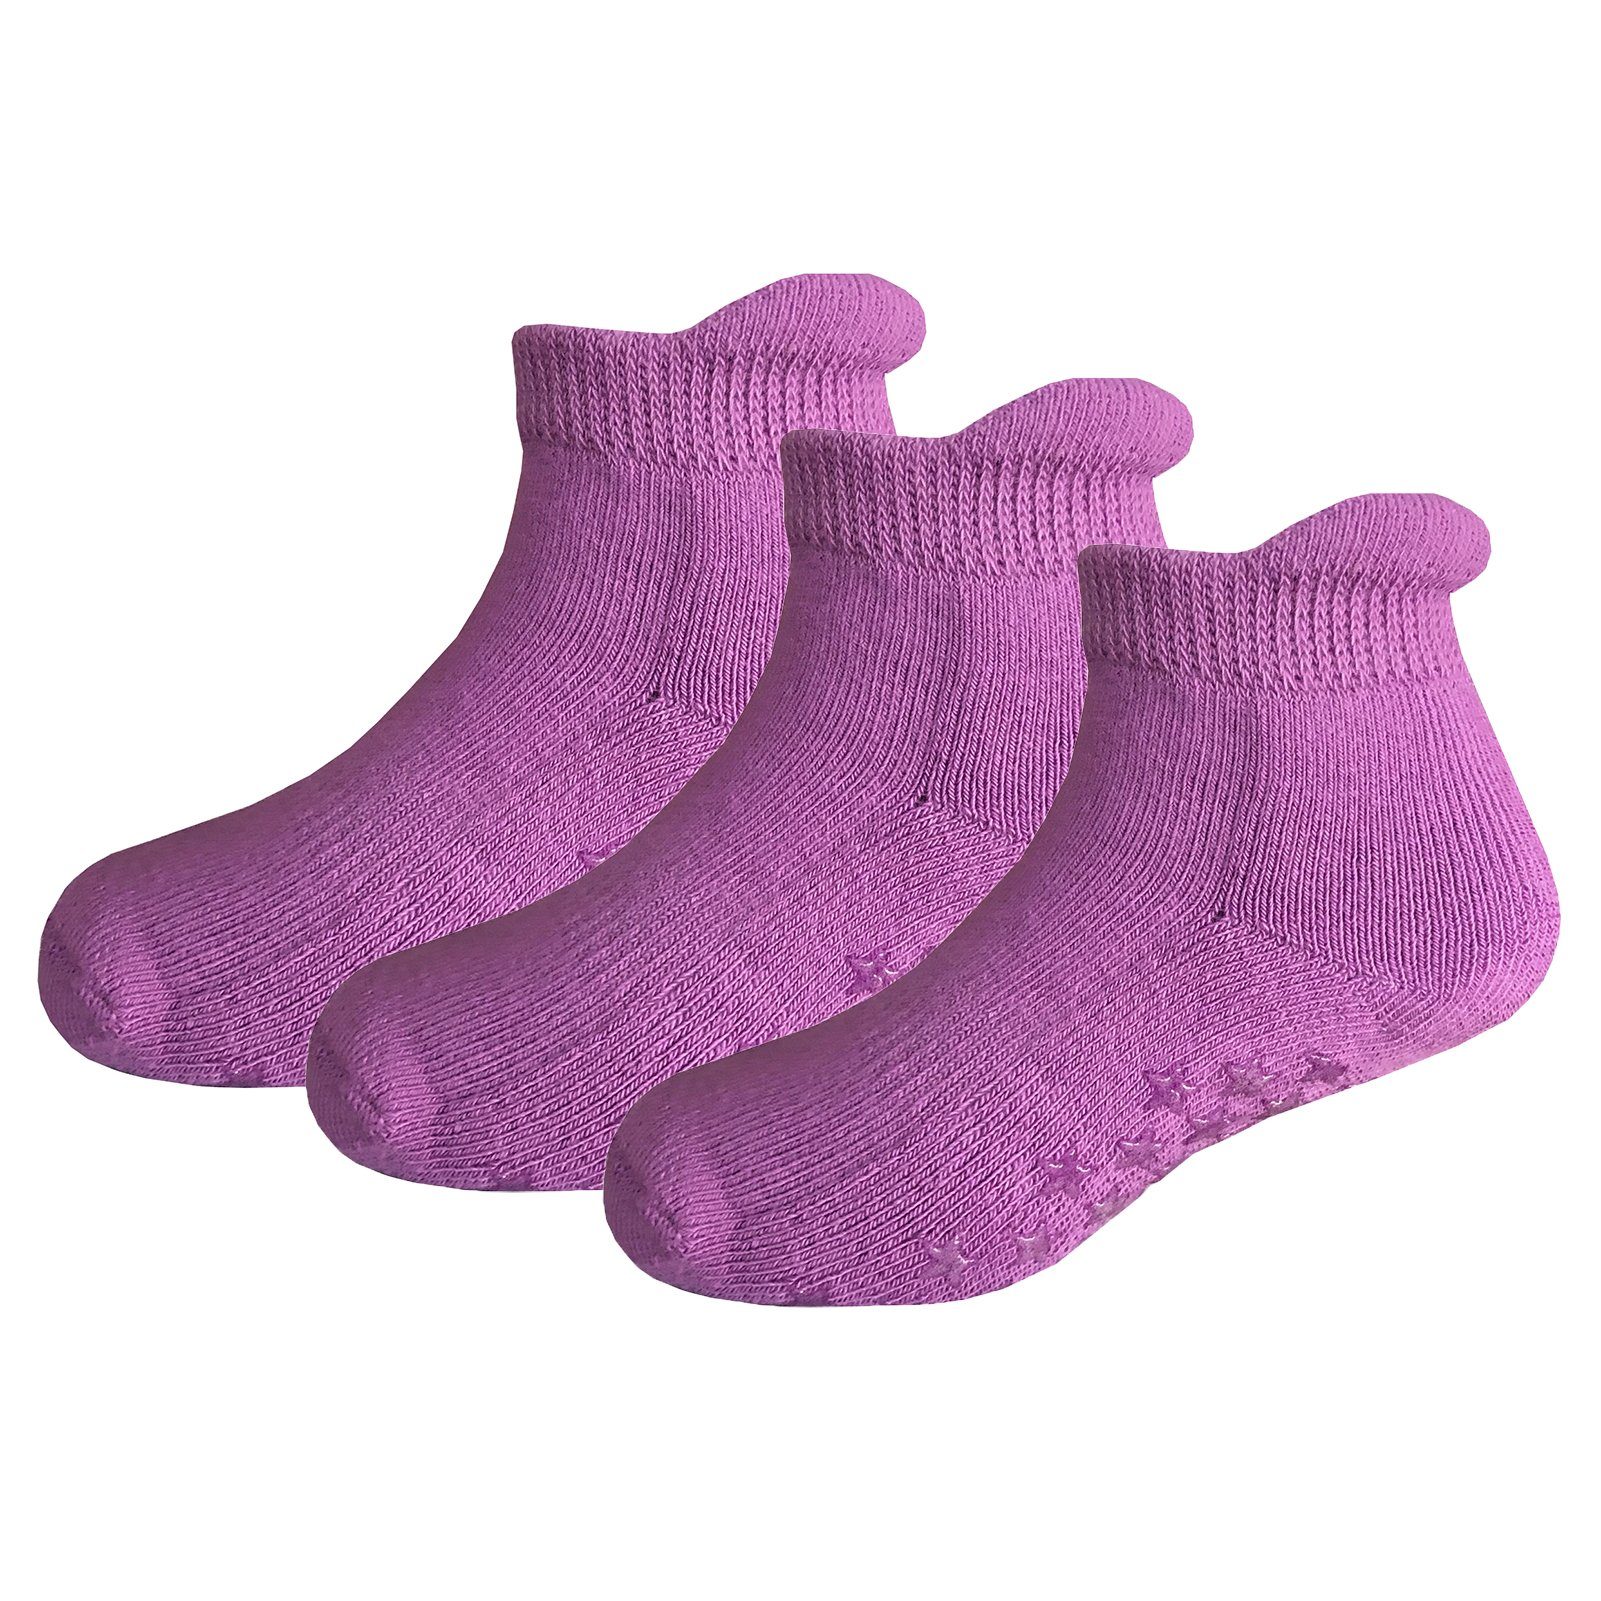 Yalion Arbeitssocken Babysocken (3-Paar) Anti-Rutsch-Socken Weiche Kinder Baumwoll Socke Atmungsaktiv und warm Lila | Wintersocken